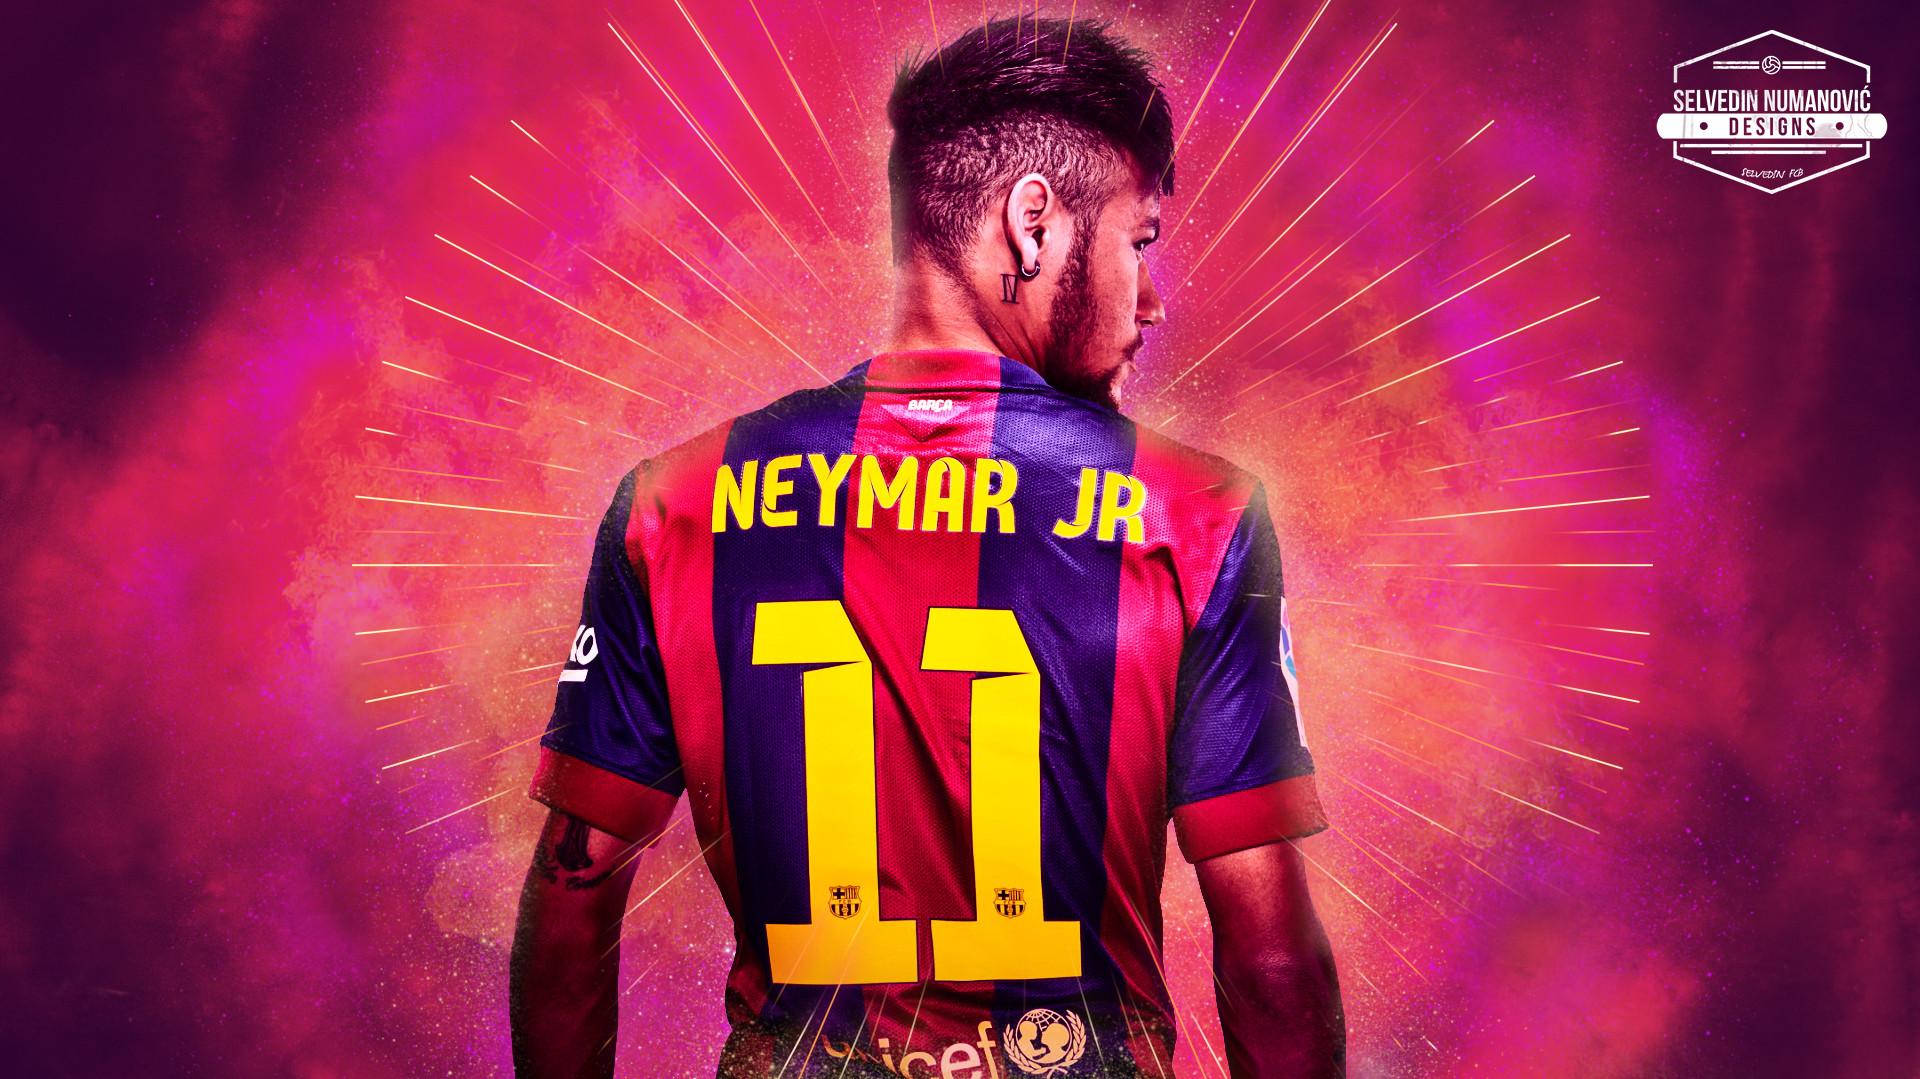 Neymar Jr HD wallpaper 2015 by SelvedinFCB